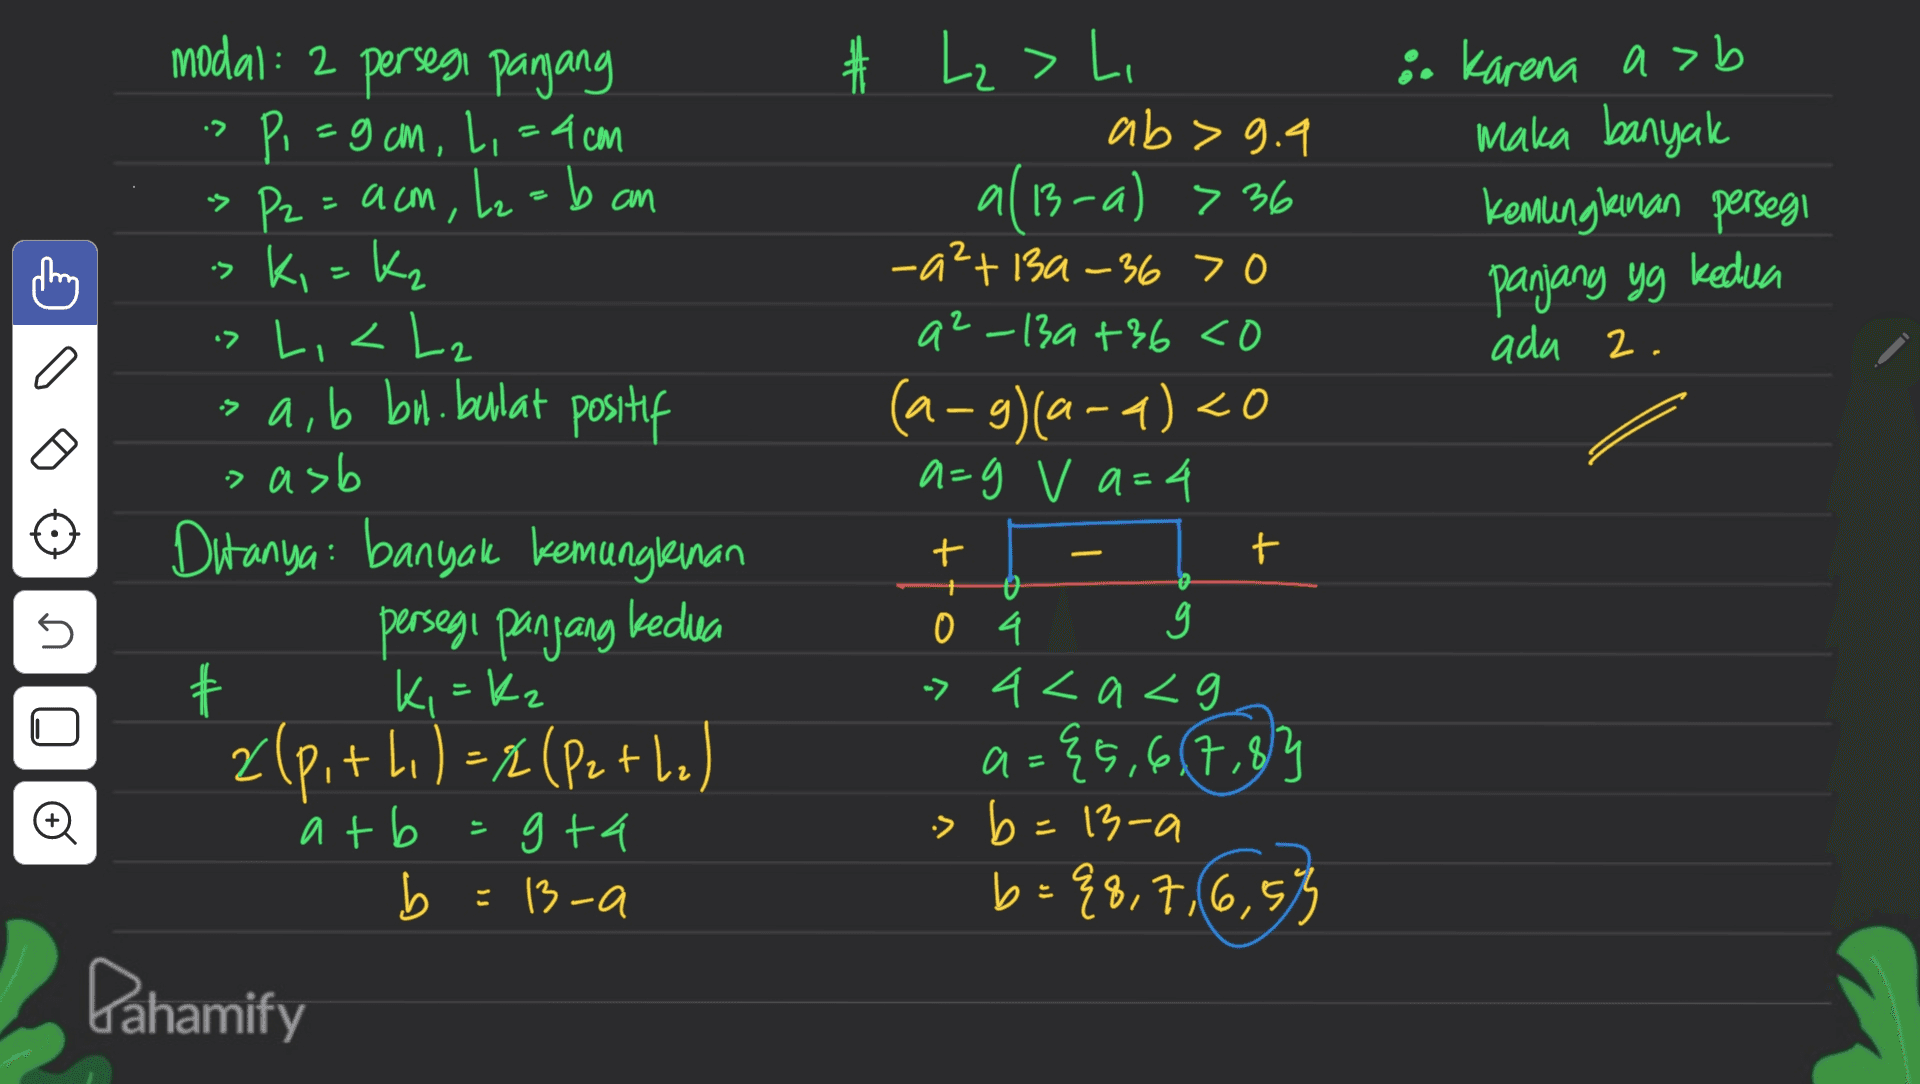 modal: 2 persegi panjang i. Karena asb maka banyak kemungkinan persegi panjang yg kedua ada 2. a # Lz > Li ab> 9.9 a(13-a) >36 al -a2+ 13a-36 > 0 a2-13a +36 <o (a-g)(a-9) <0 a=g v a=4 t + 04 9 -> 4<a<g a={5,6,7,8 { > b=13-a b -a b={8,7,6,55 . + Pi=gom, L, = 4cm » P2 = acm, L₂=b an ki=kz > L, <Lz > a, b bu. bulat positif > asb Ditanya banyak kemungkinan persegi panjang kedua 十 Ki=Kz zlp, +11) = x (Pethel atb =gta b = 13-a Dahamify - o o s s # Đ a 